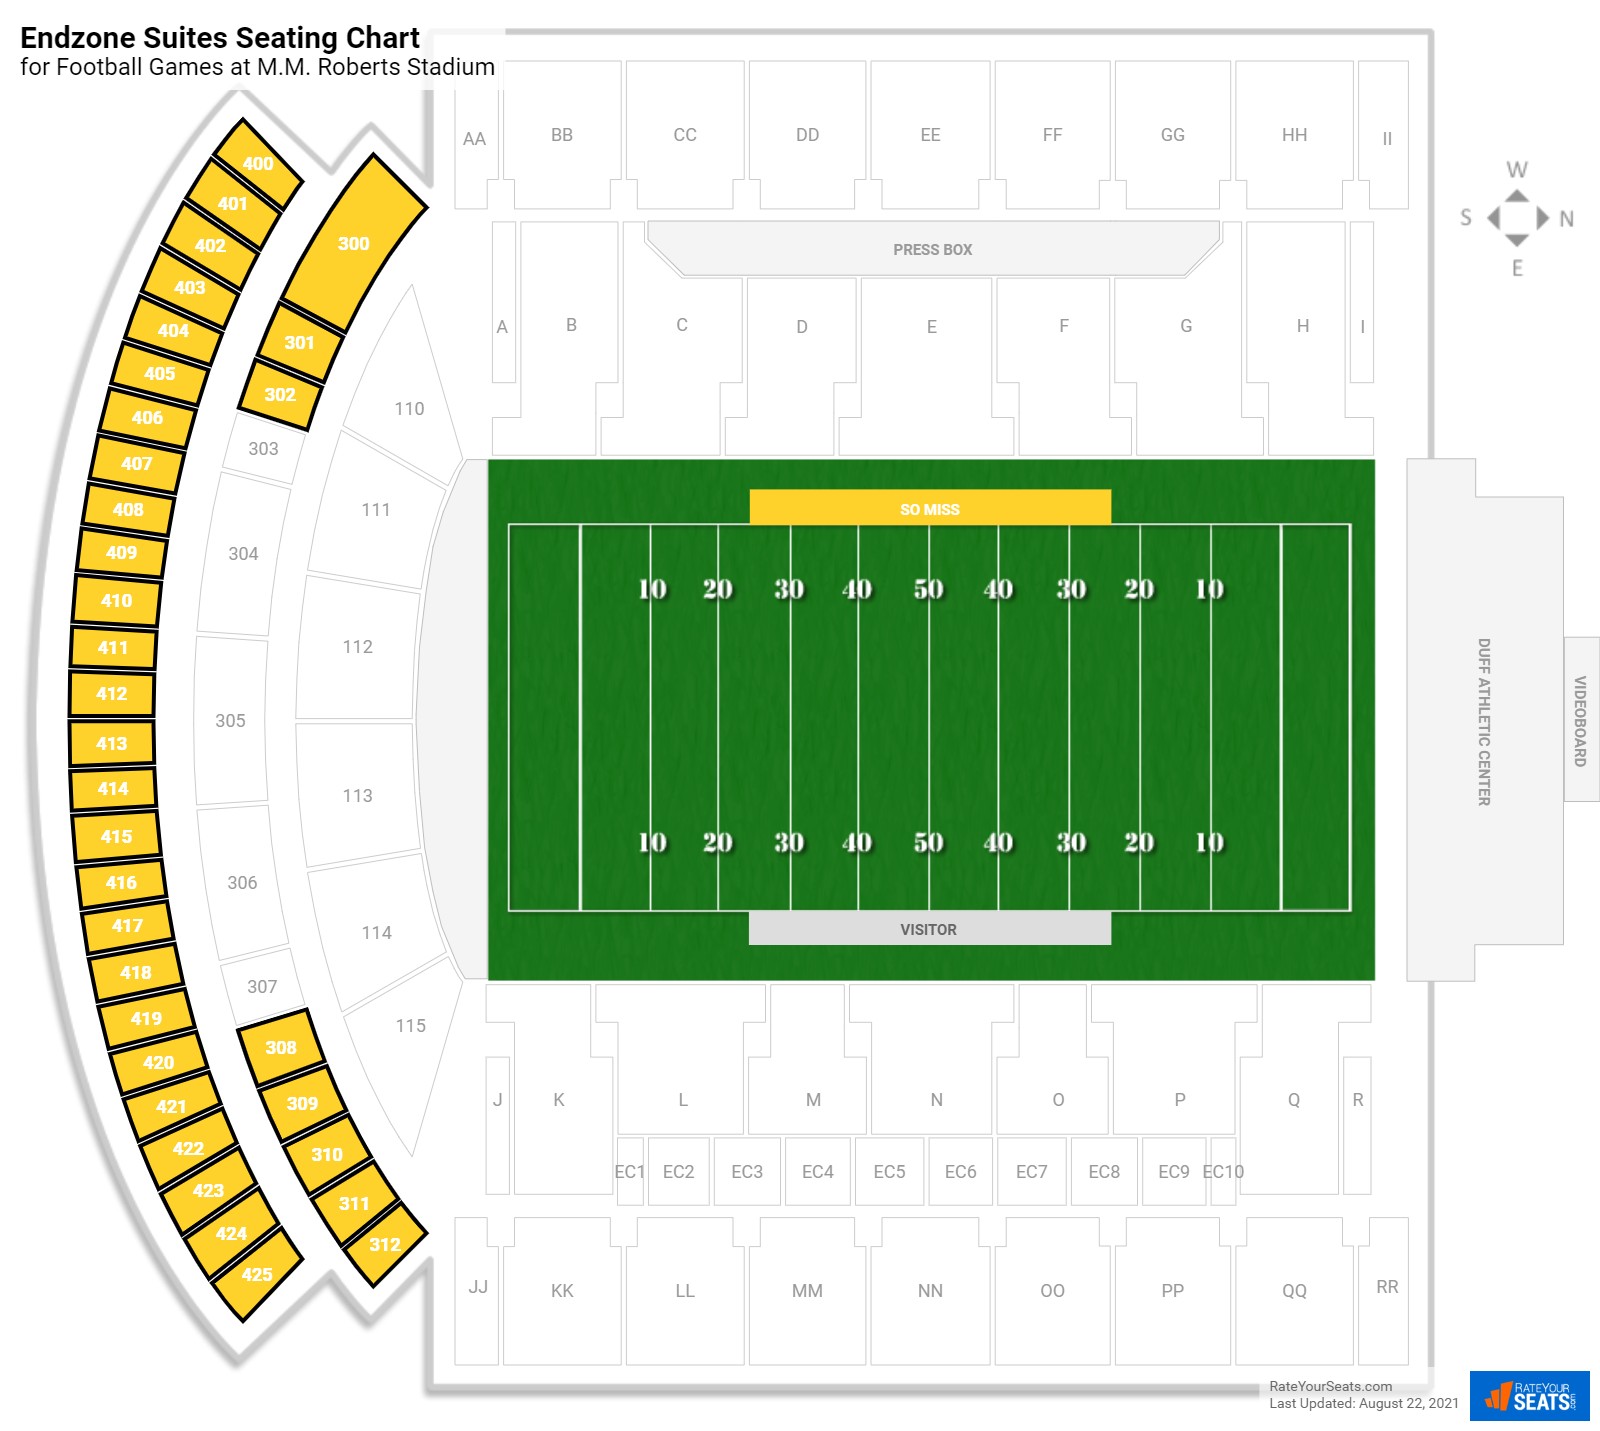 Football Endzone Suites Seating Chart at M.M. Roberts Stadium